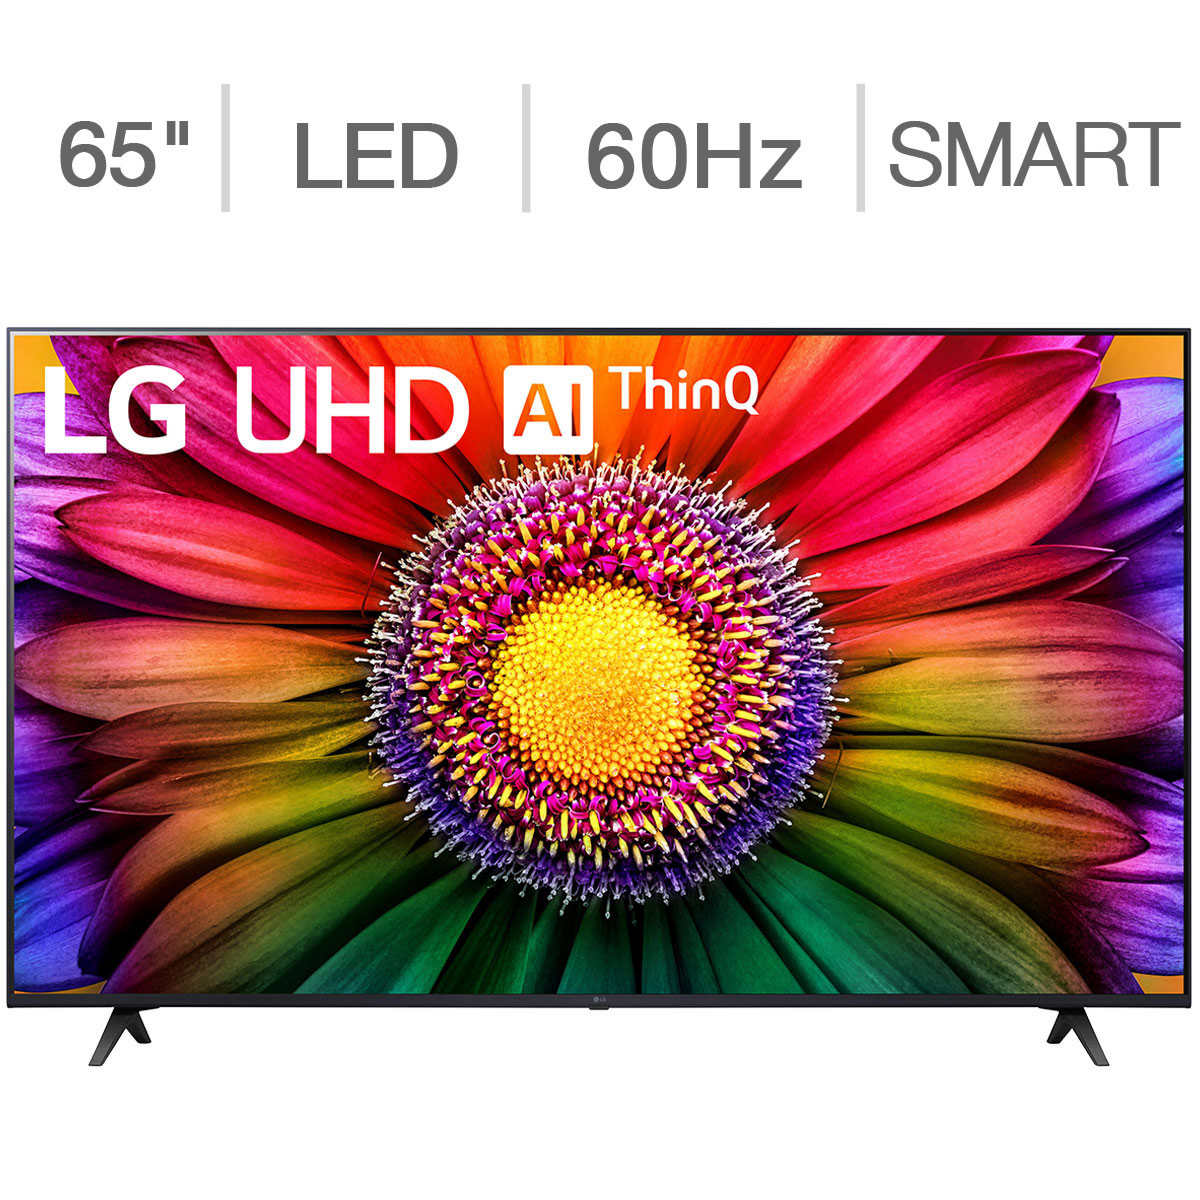 LG 65 Class - UR8000 Series - 4K UHD LED LCD TV